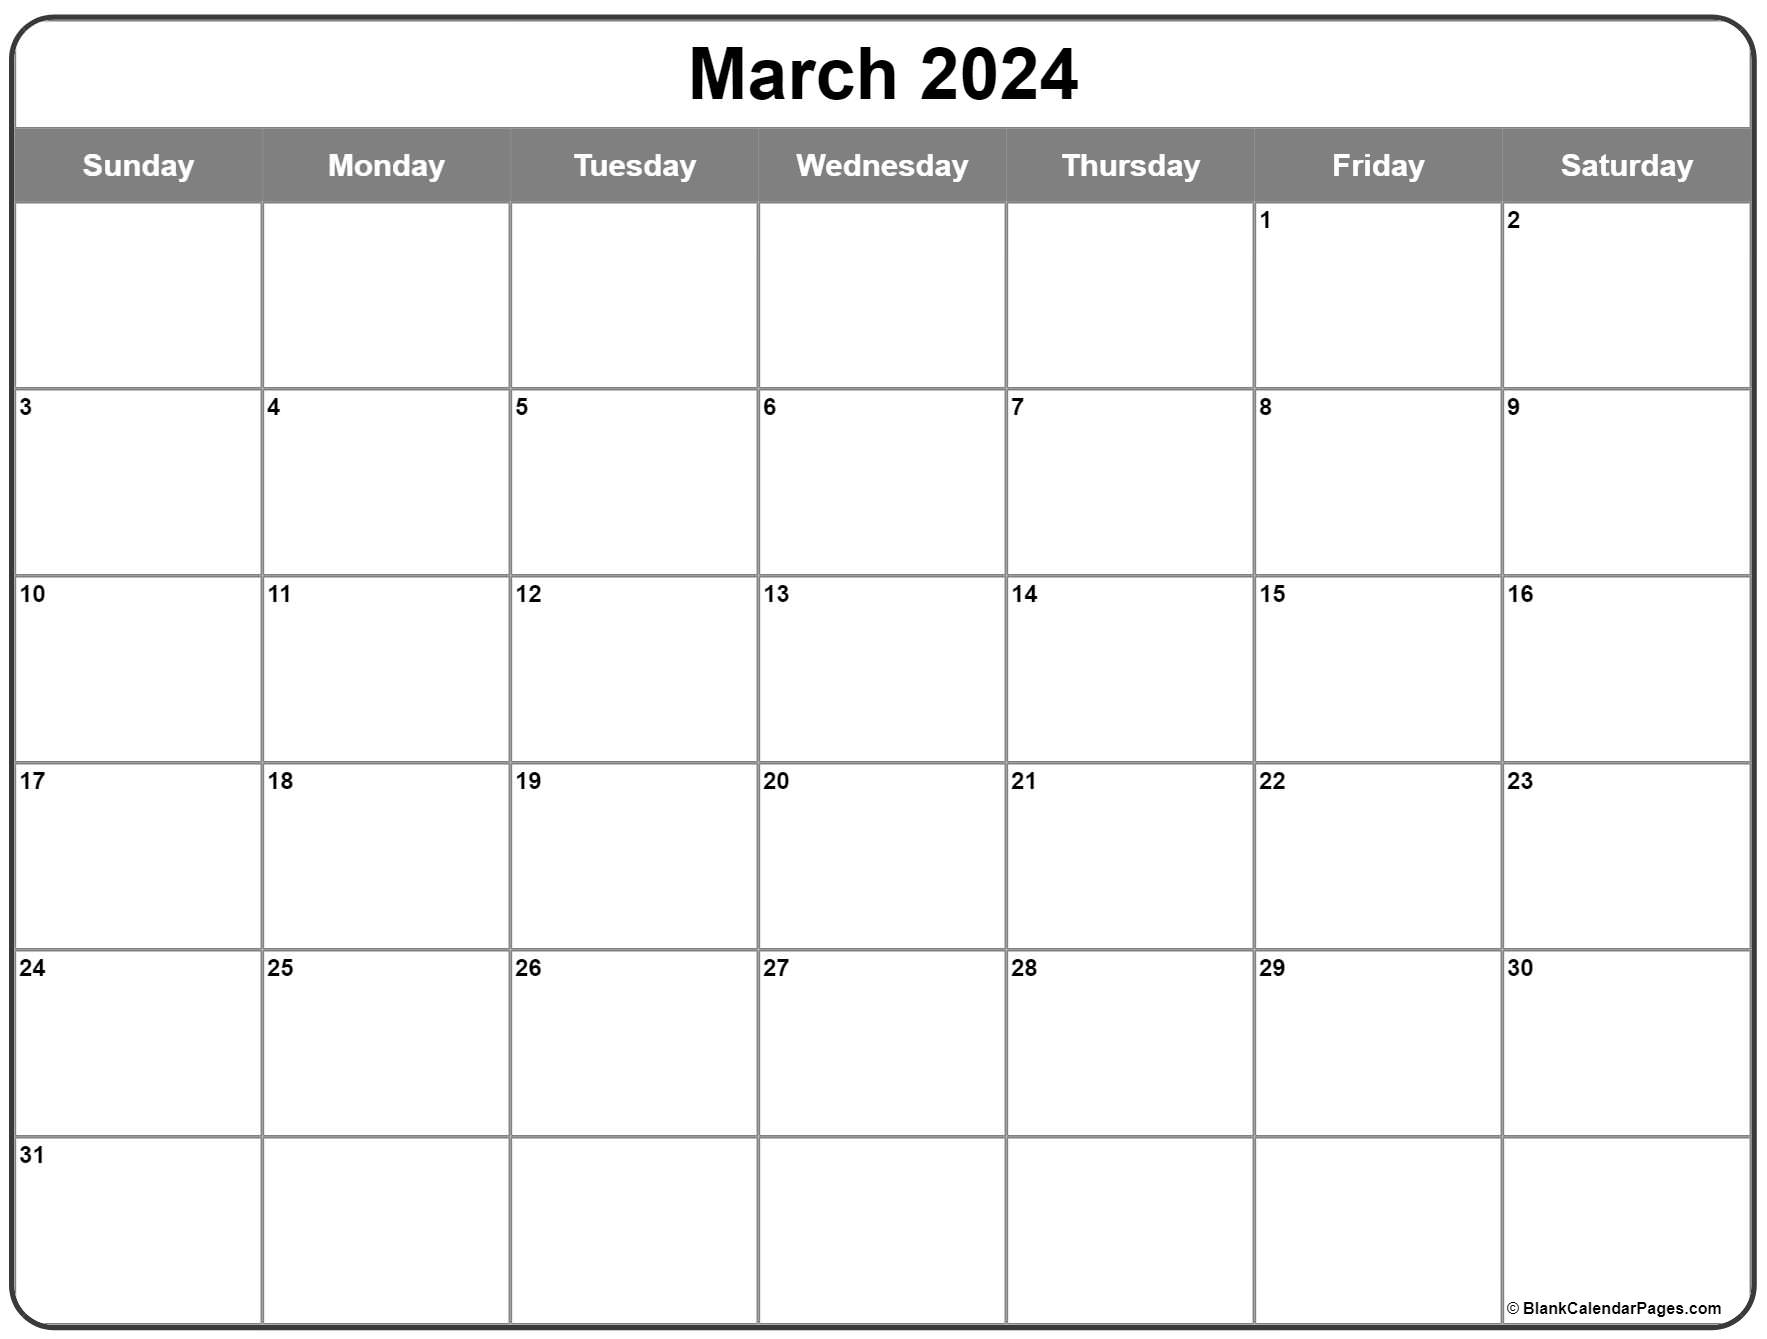 March 2024 Calendar | Free Printable Calendar intended for Free Printable April 2024 Calendar Large Boxes